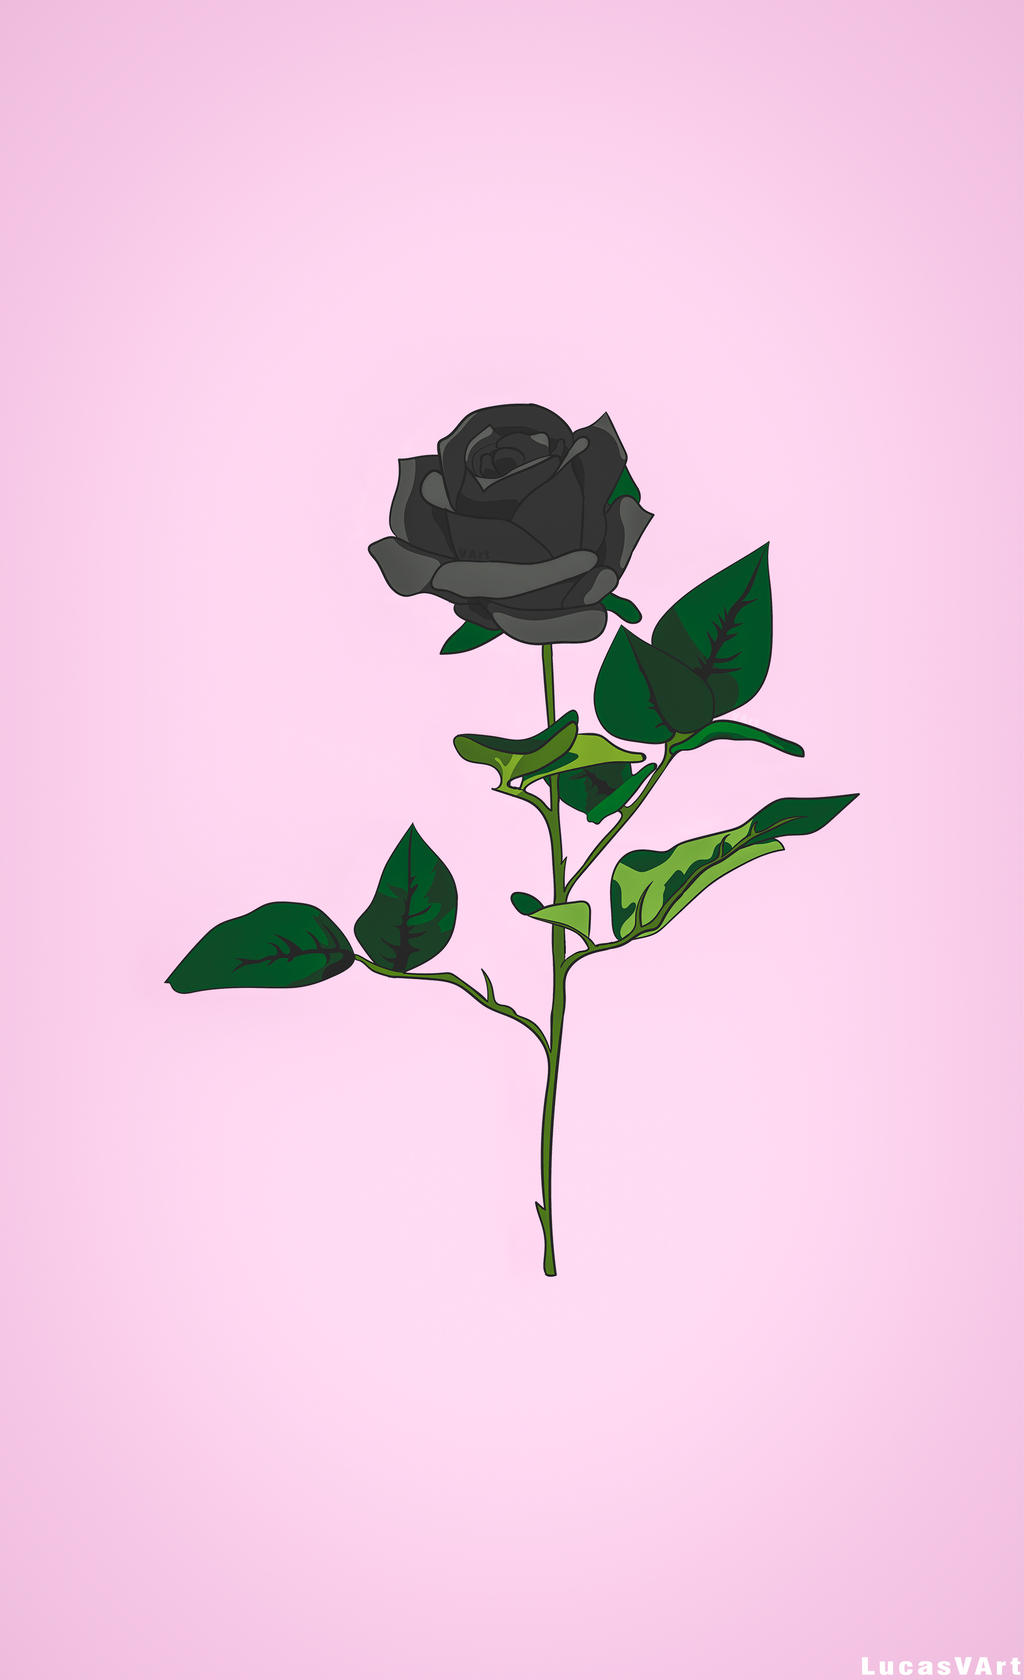 Black Rose by LucasVArt on DeviantArt